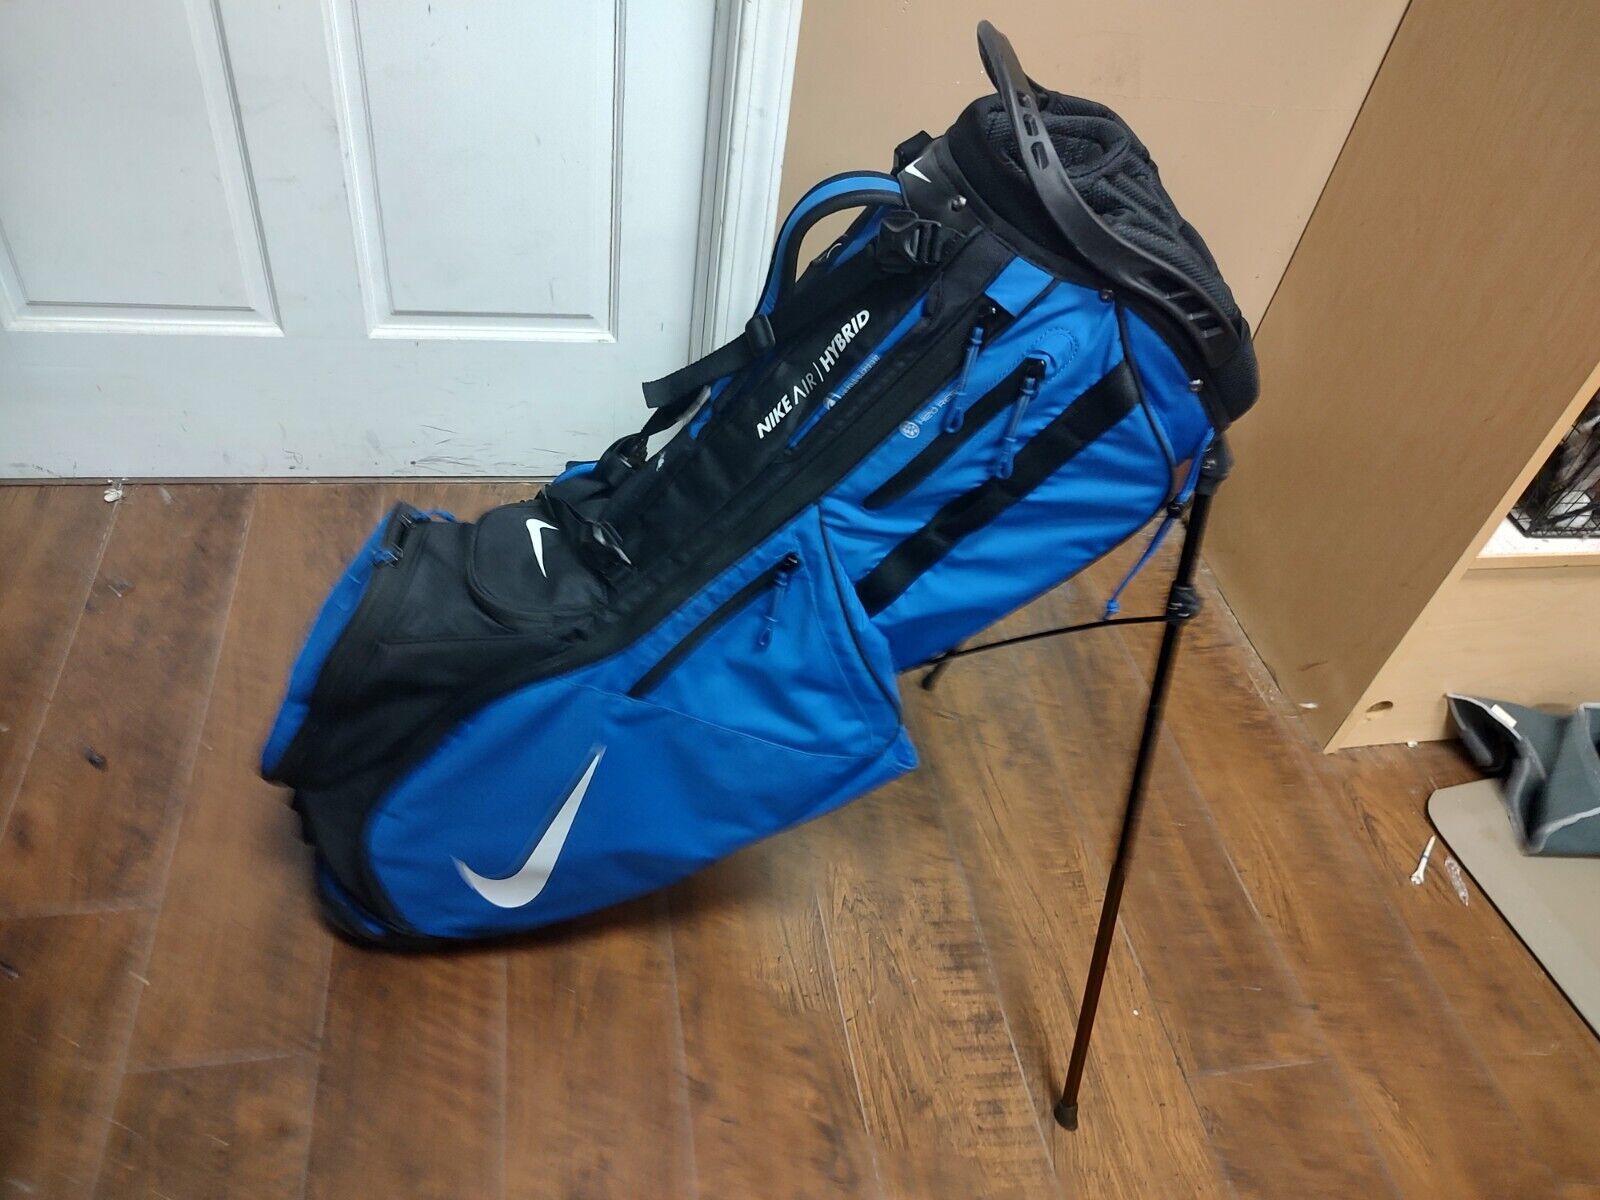 Nike 14 Divider Air Hybrid Dual Strap Golf Stand Bag Blue/Black - $213.75